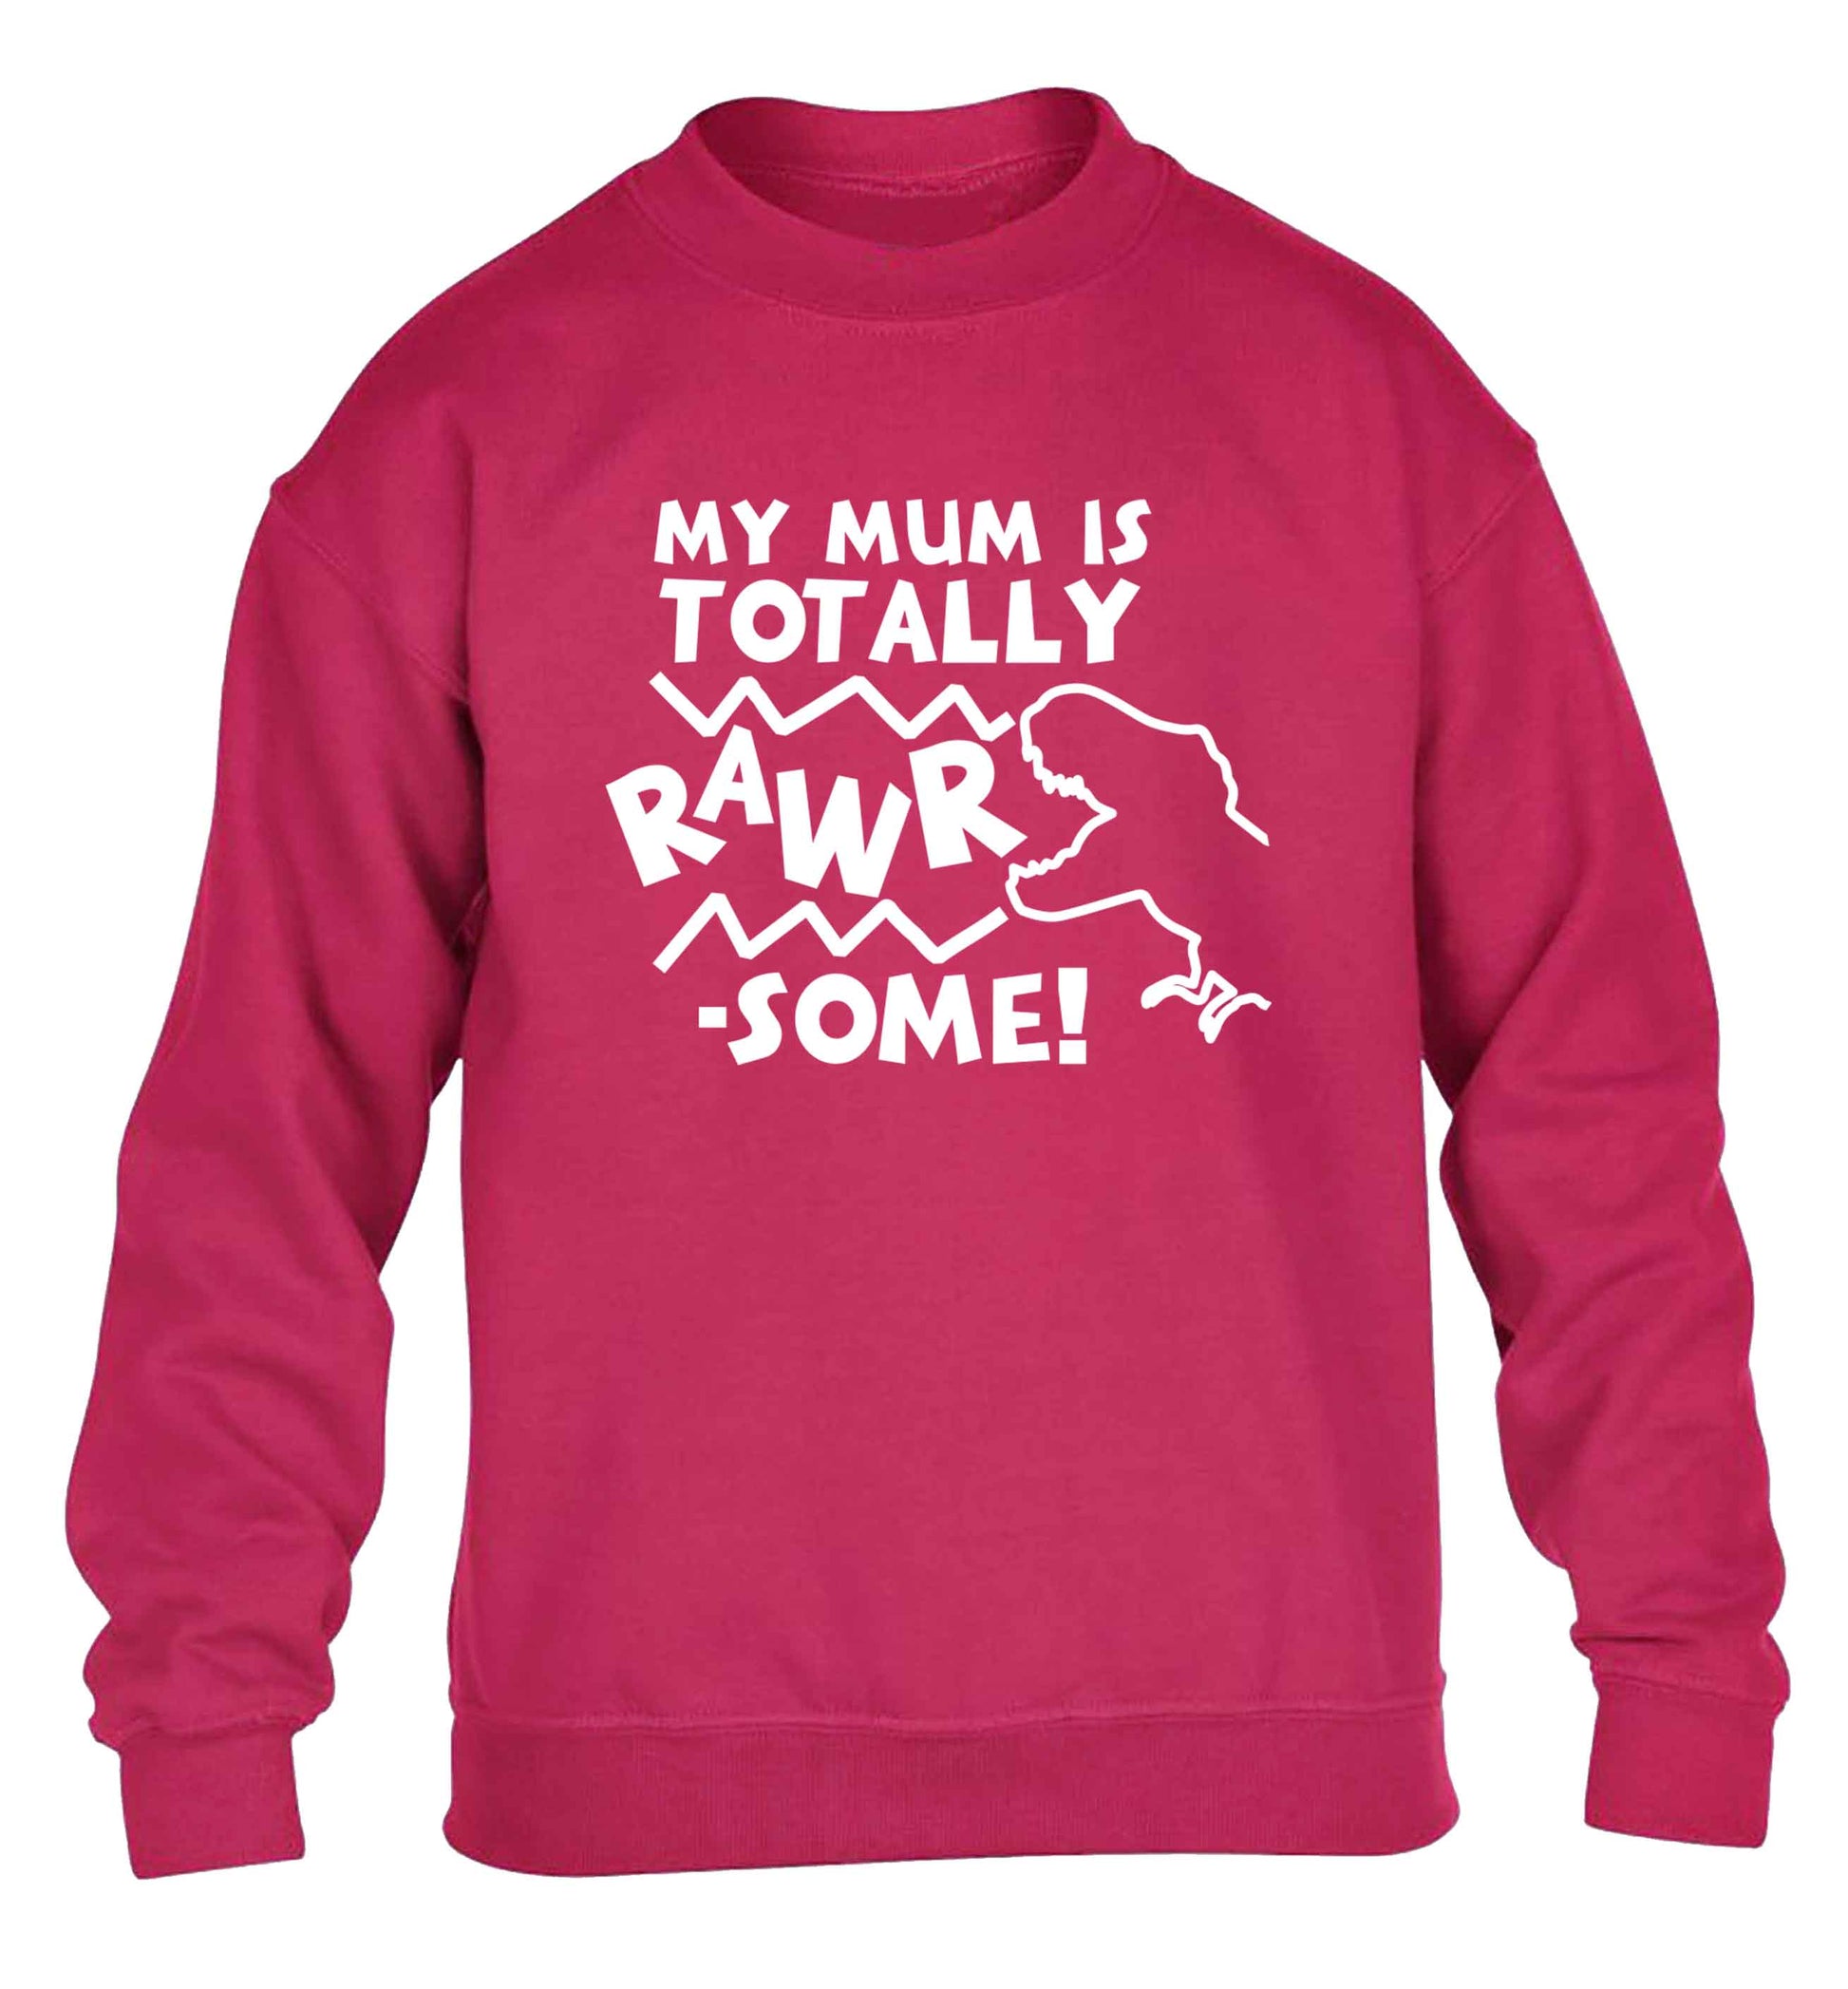 My mum is totally rawrsome children's pink sweater 12-13 Years